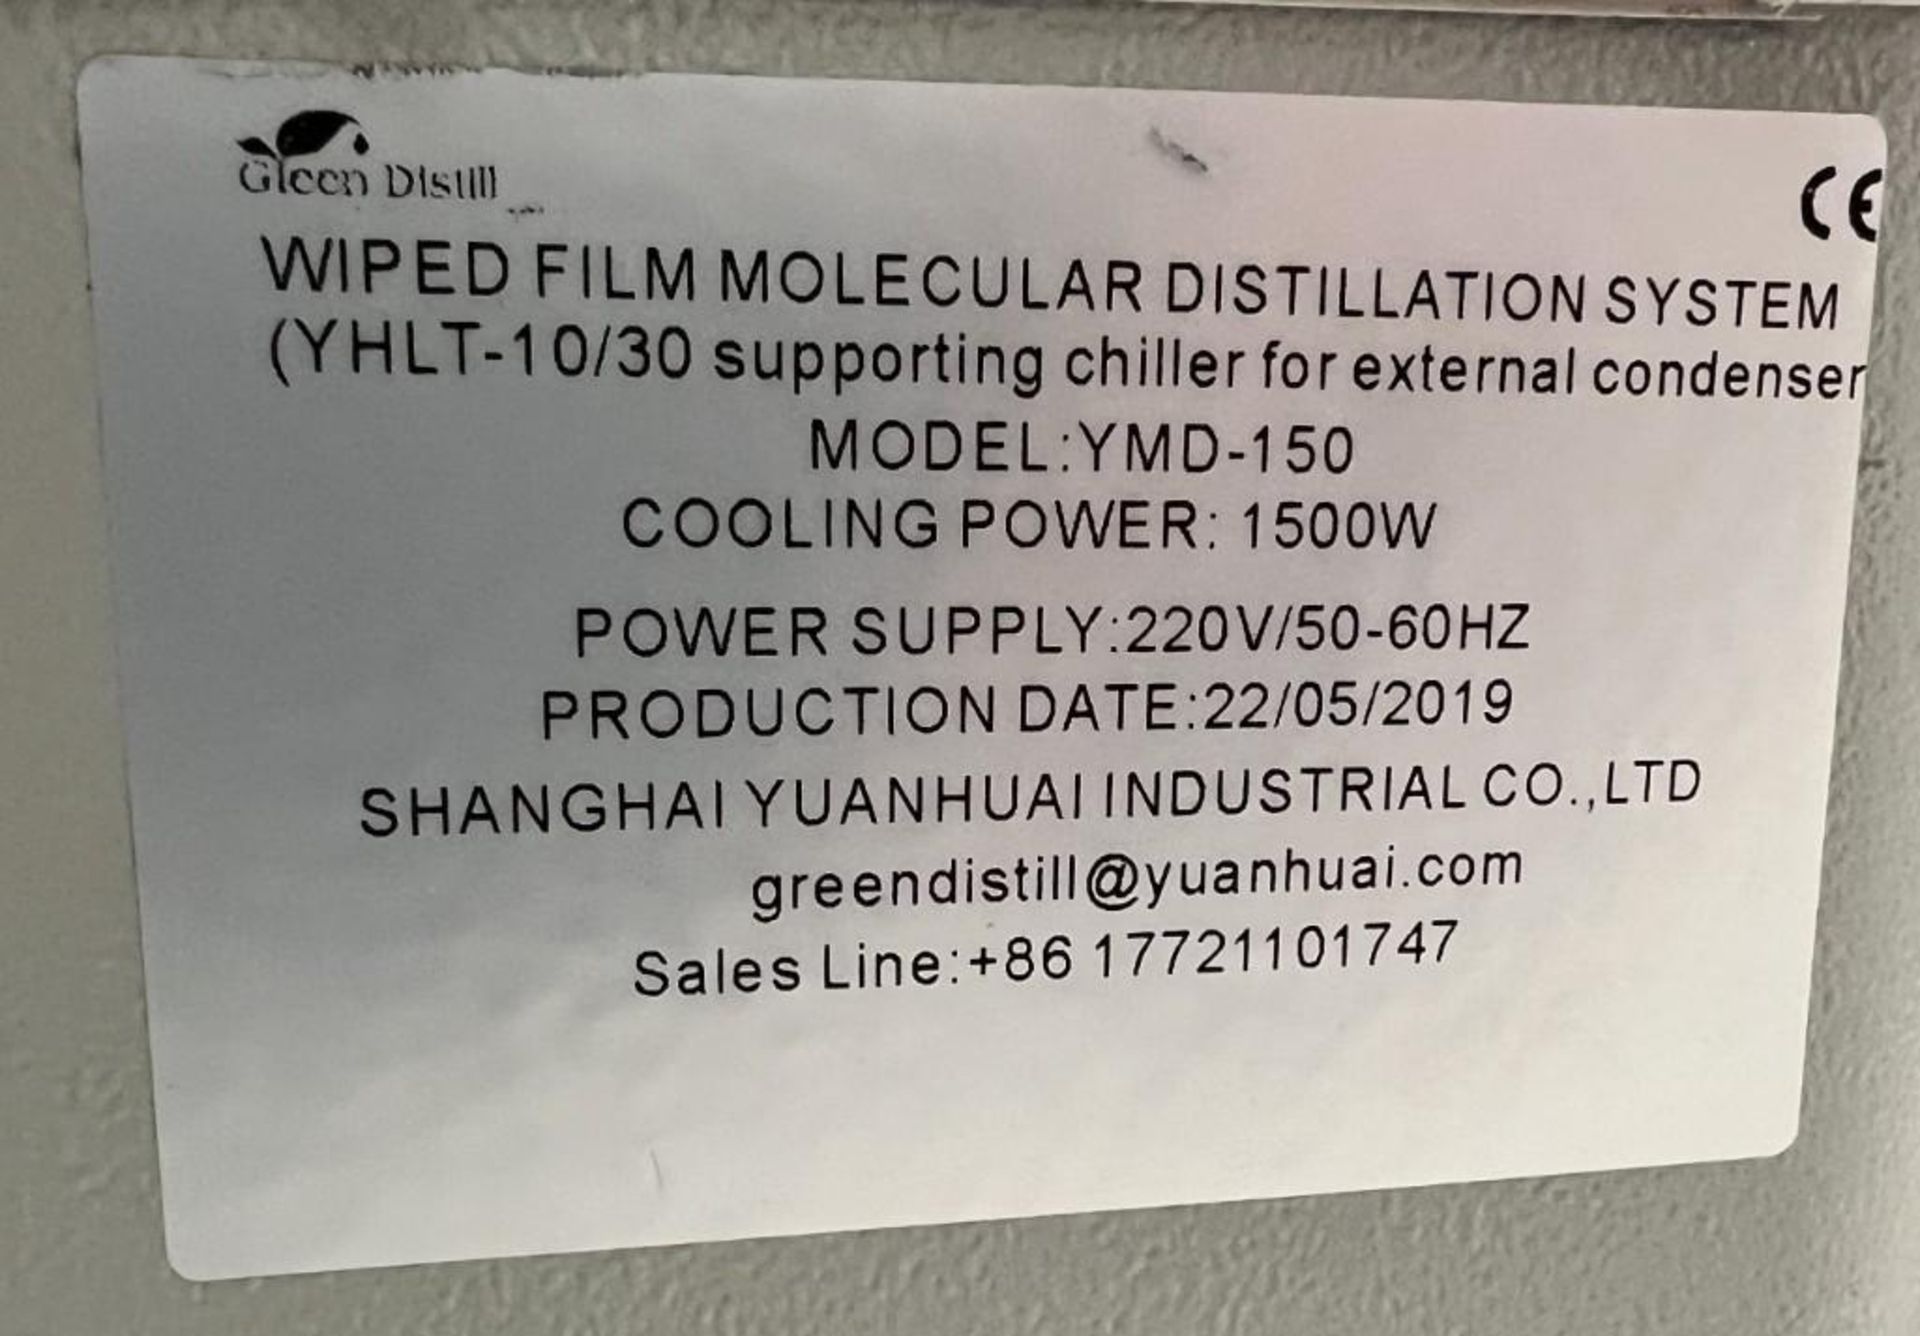 YHCHEM Wiped Film Molecular Distillation System, Model YMD-150, Built 05/2019. With misc. glass, vac - Image 13 of 29